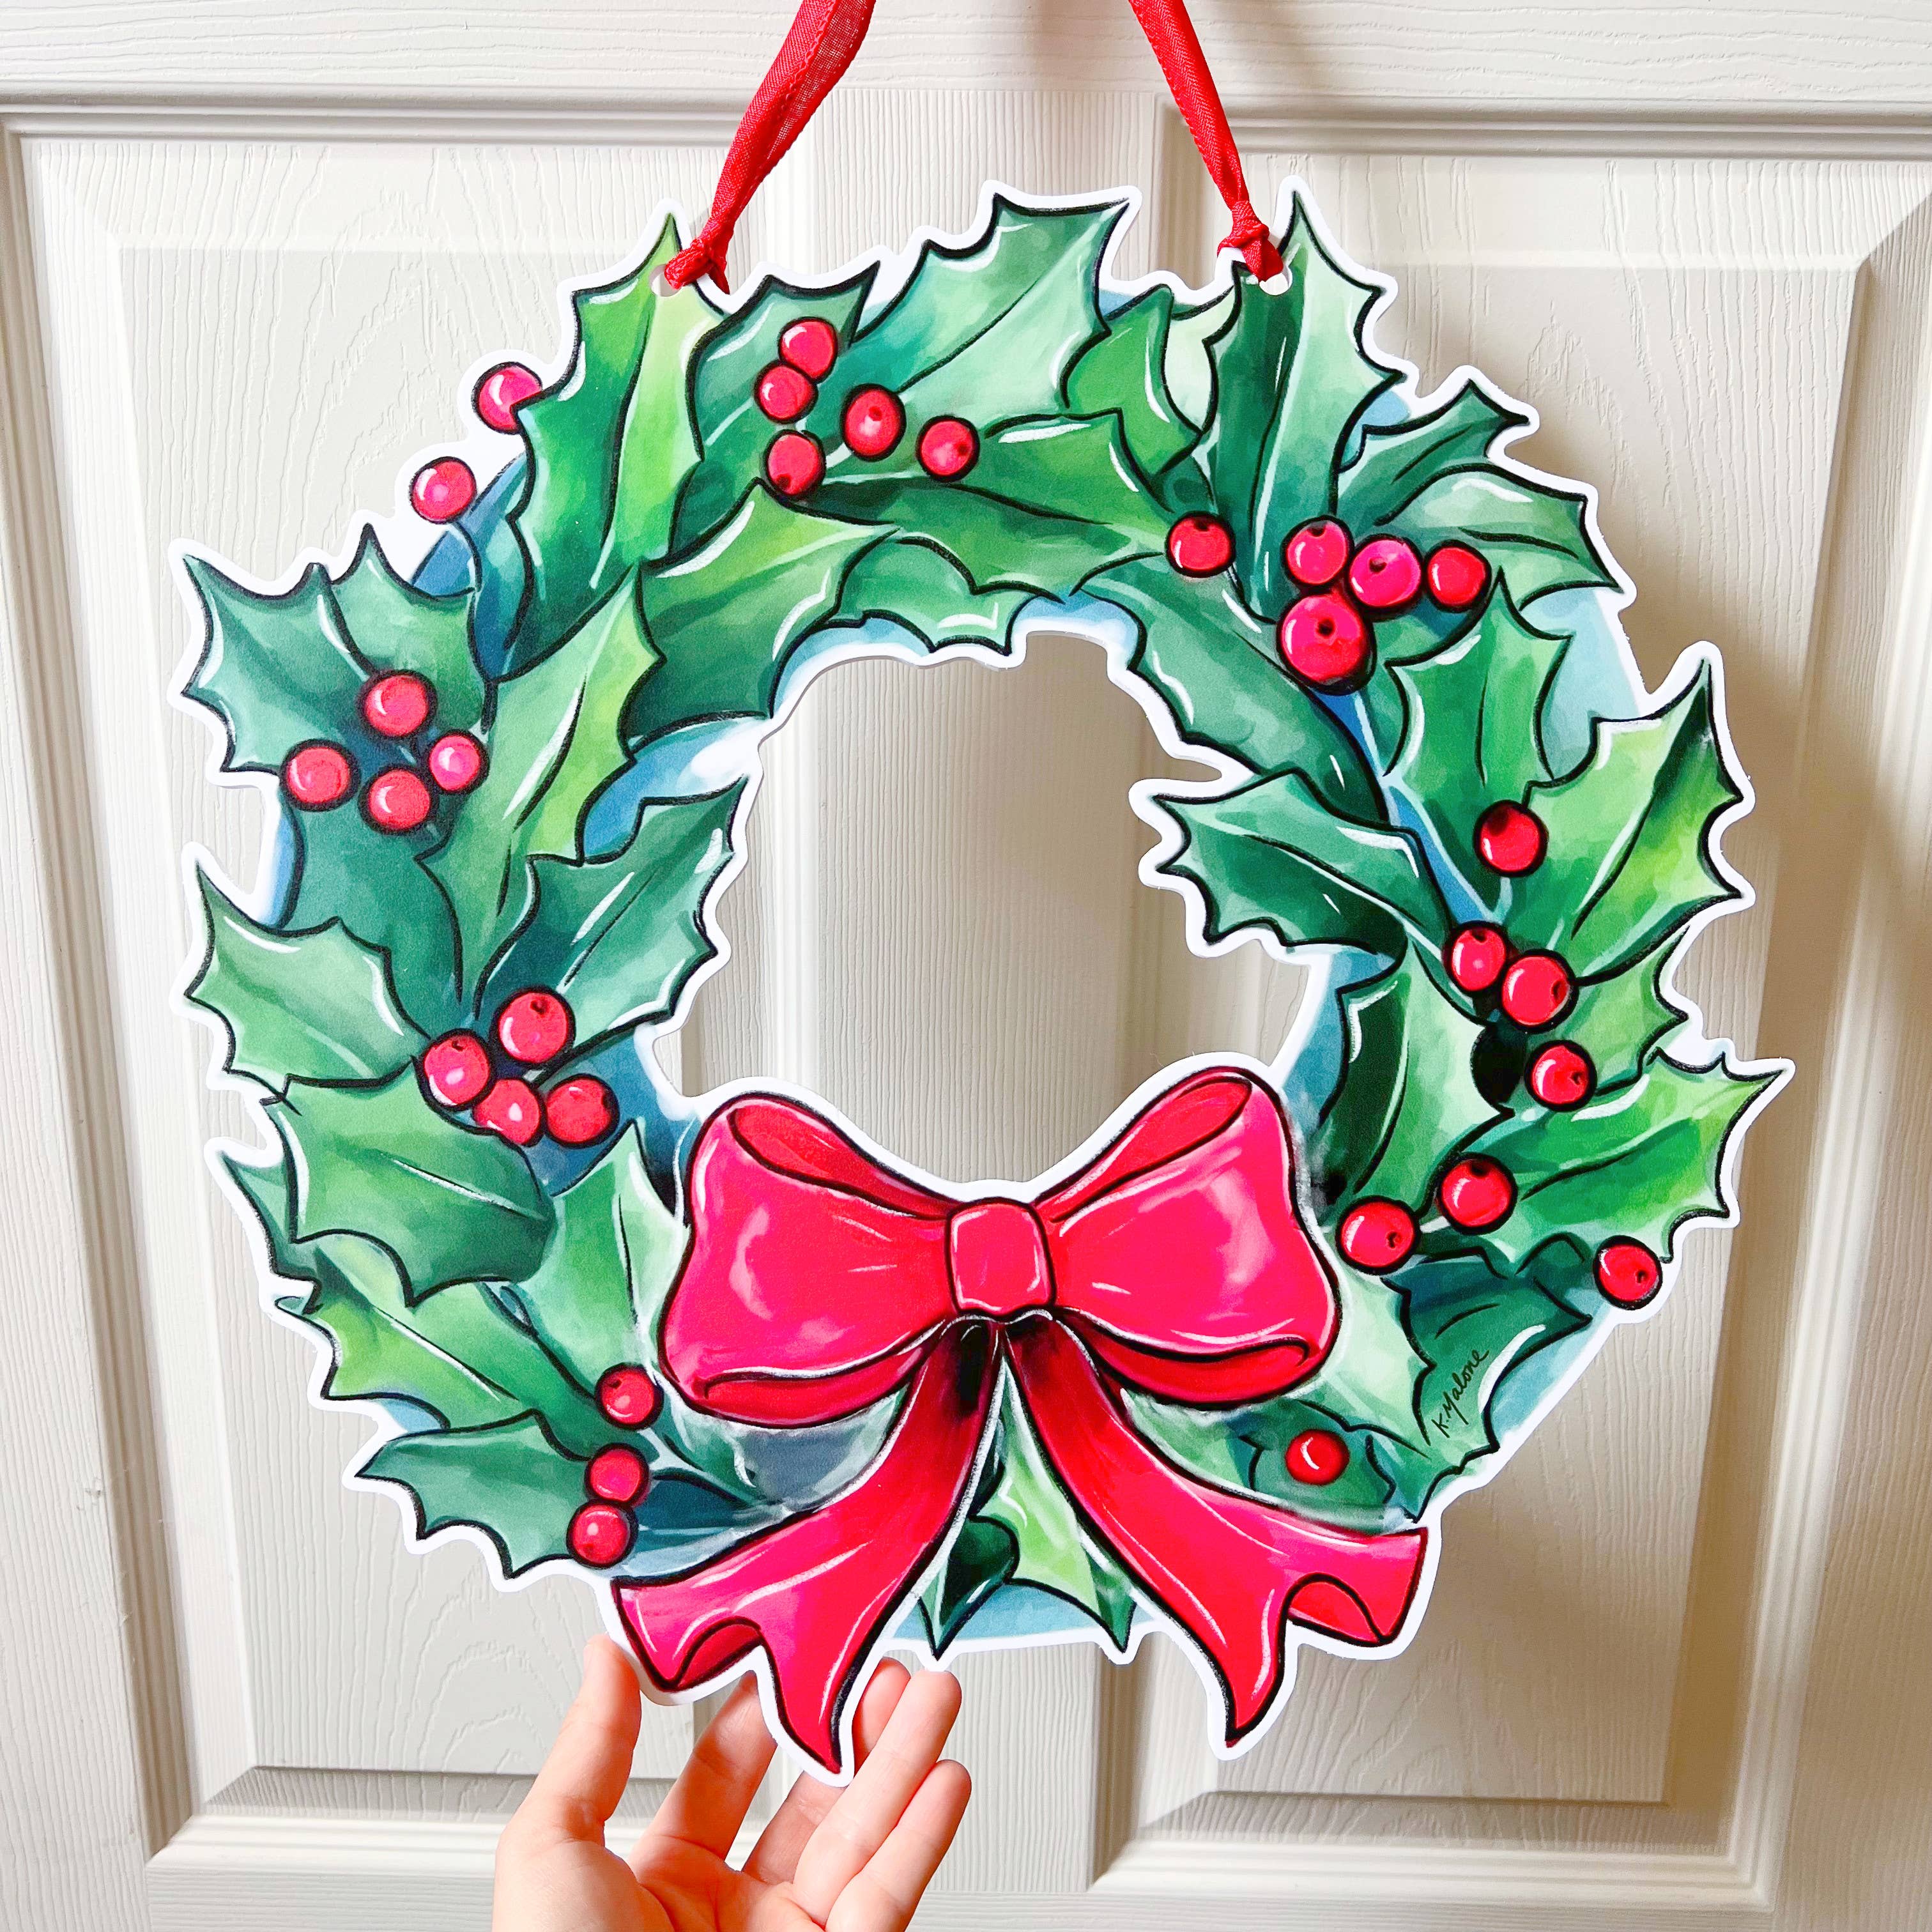 Holly Holiday Wreath Door Hanger - Christmas Outdoor Decor